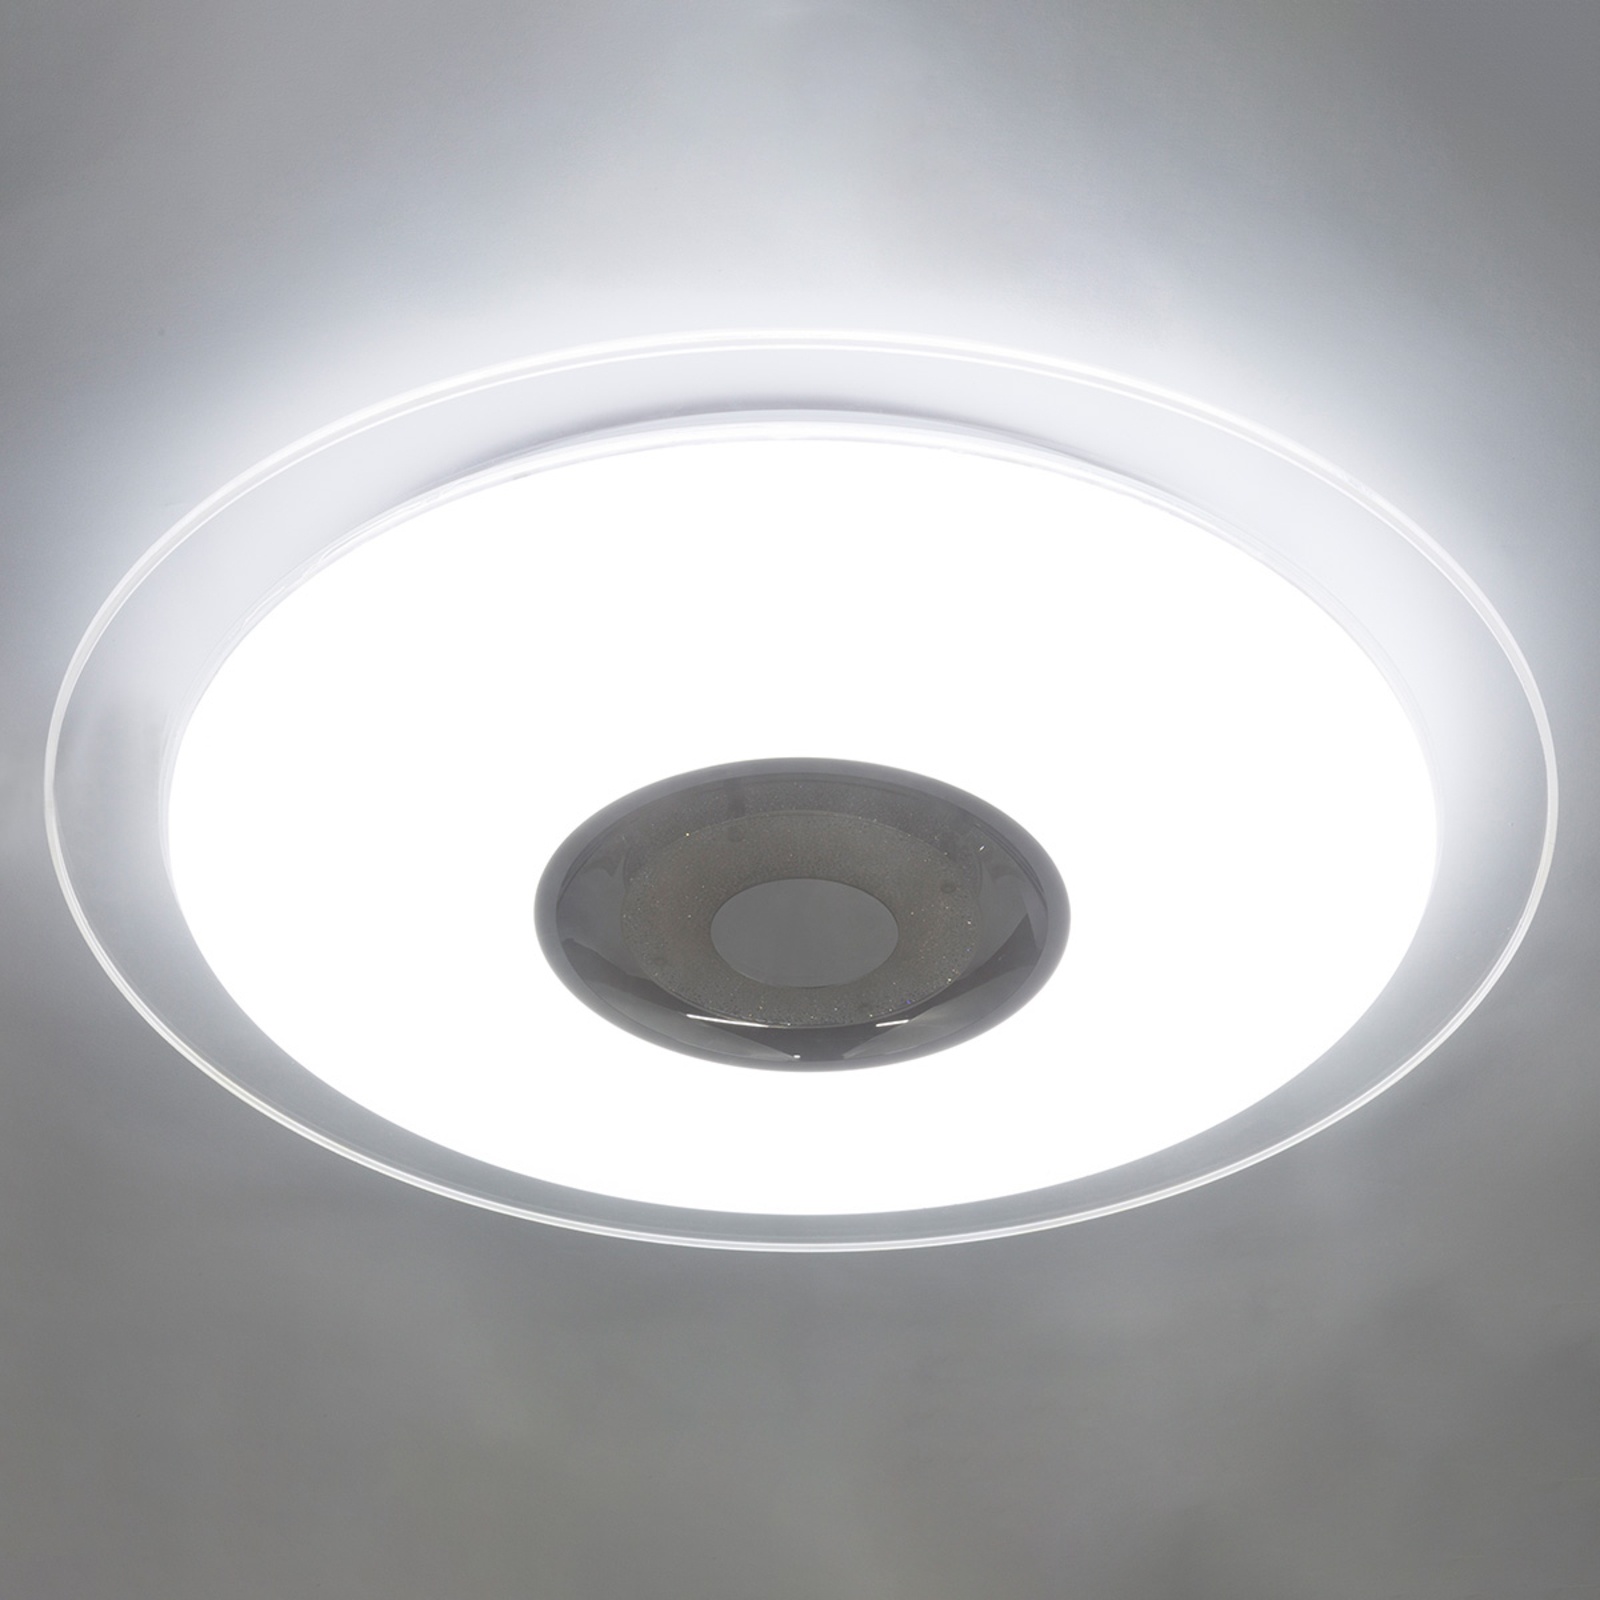 LED plafondlamp Tune RGB met luidspreker Ø 47,5